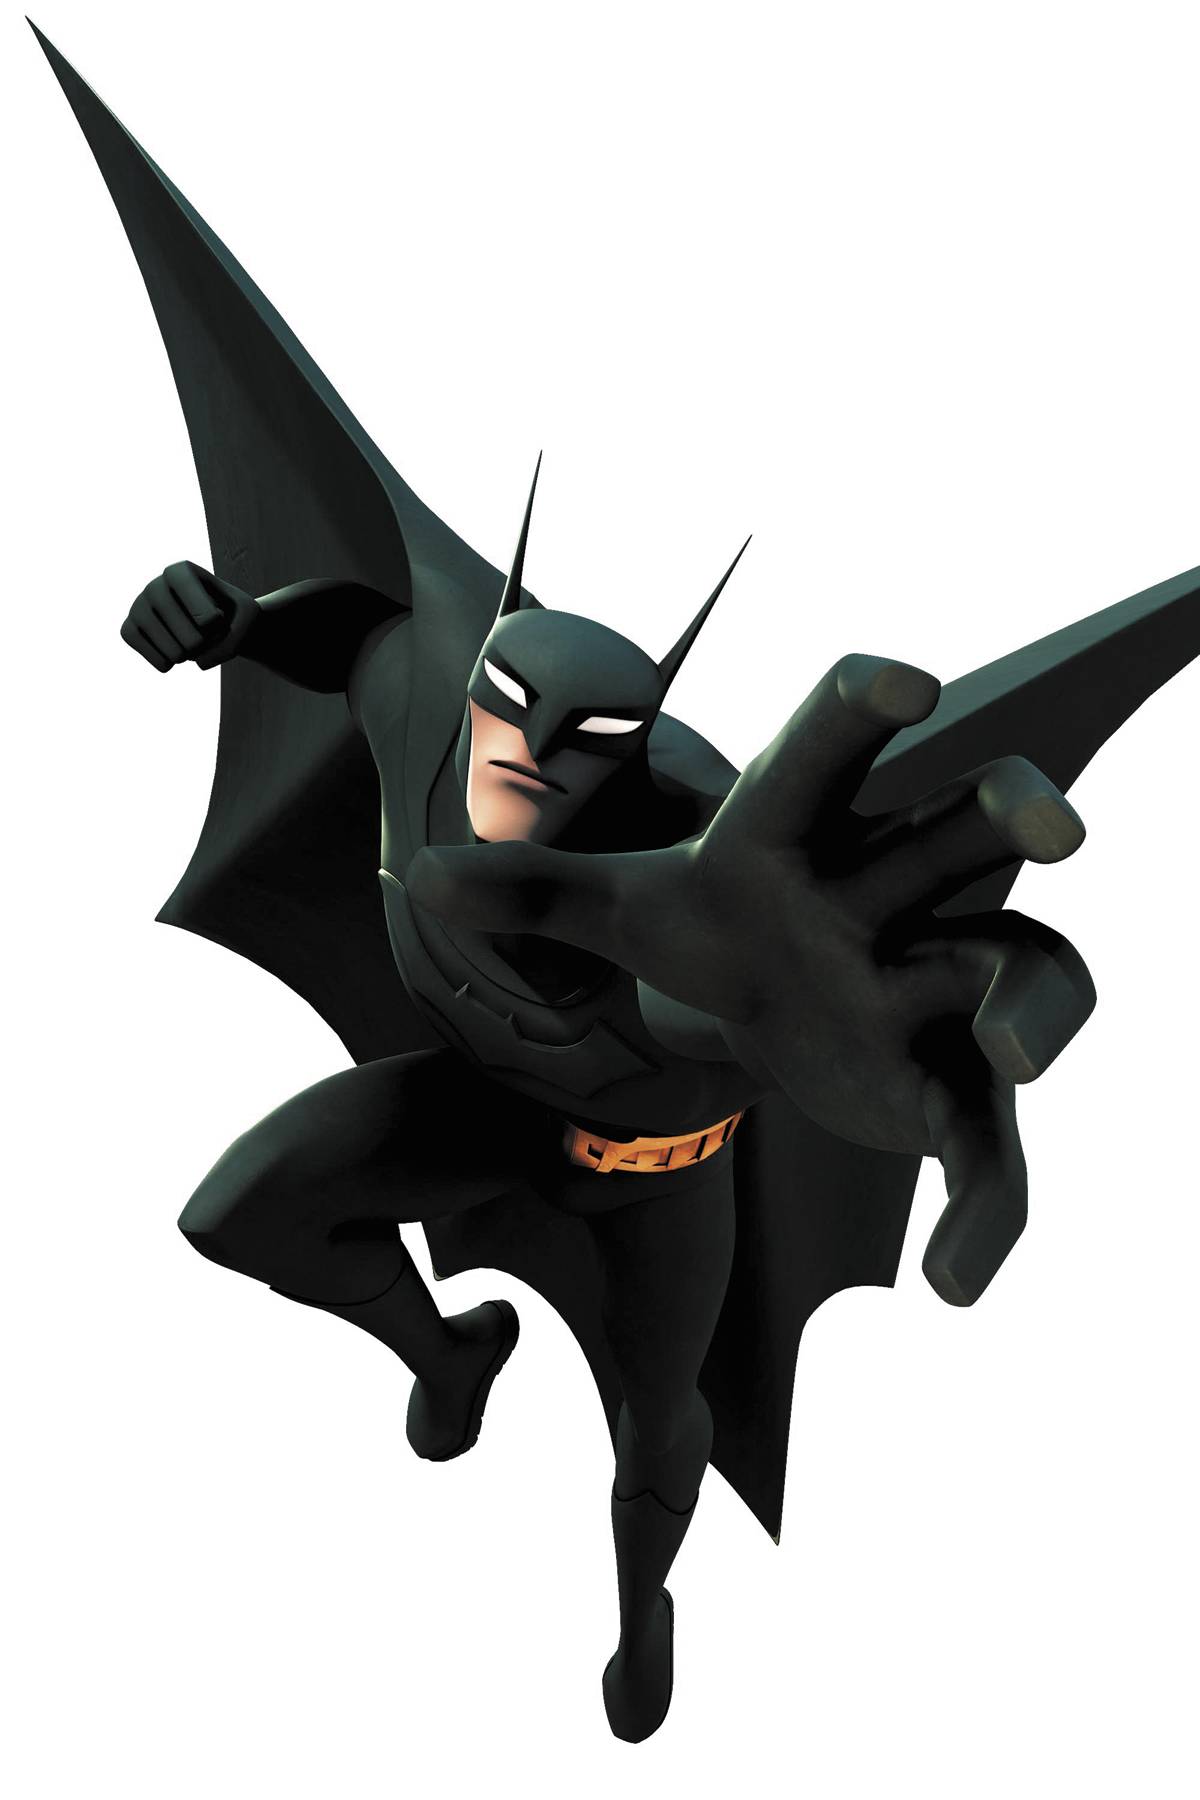 Bruce Wayne (DC Animated Universe), DC Movies Wiki